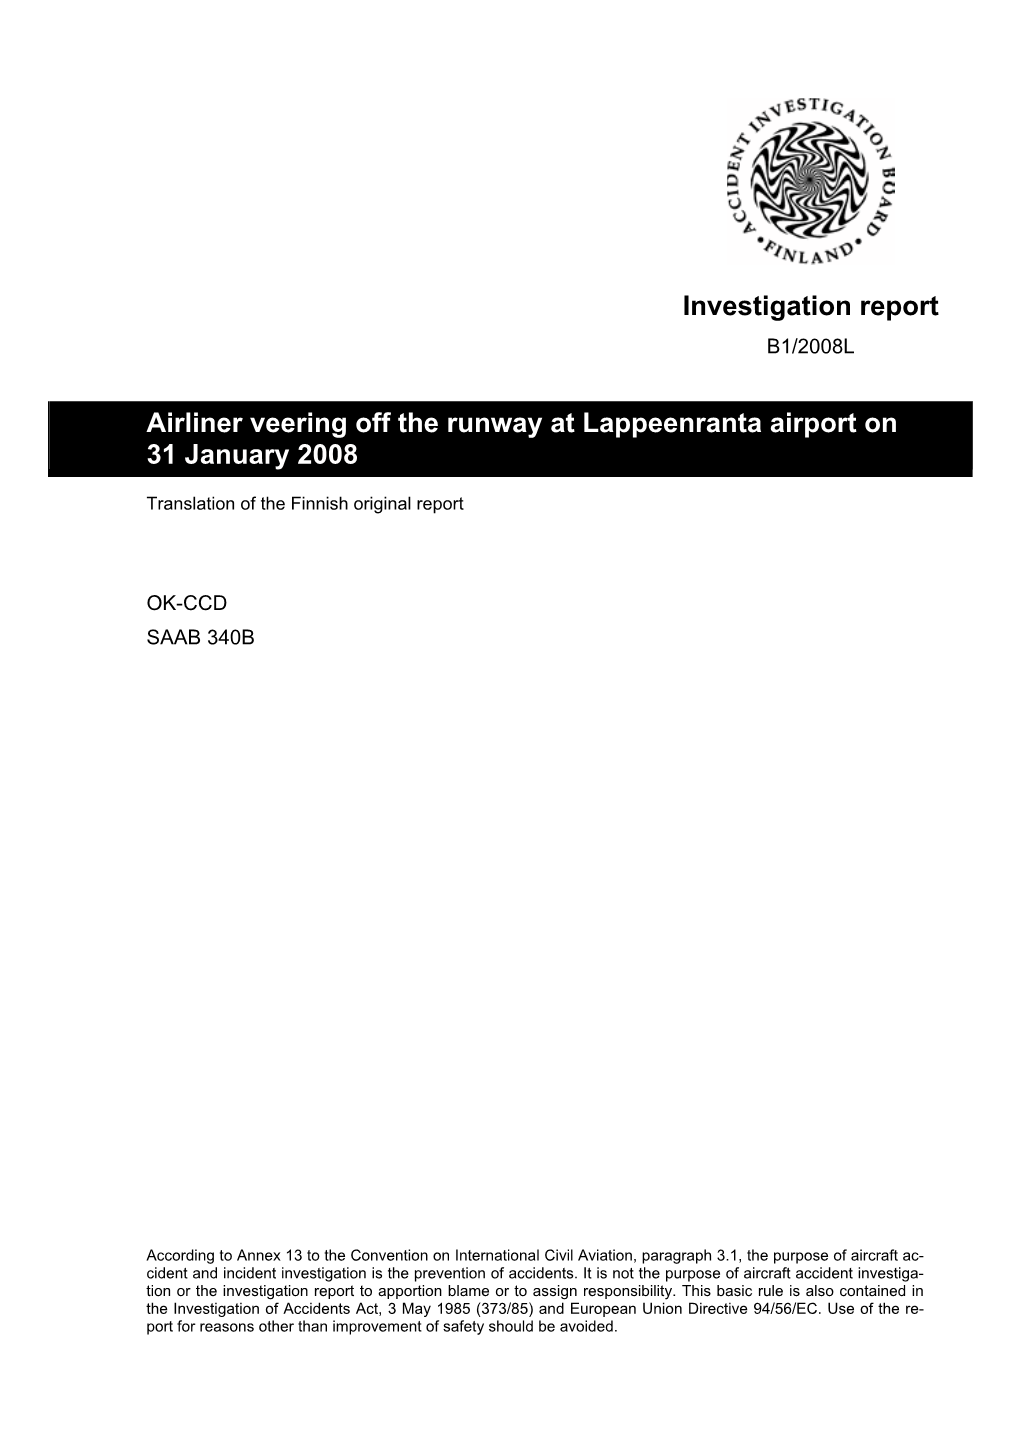 Investigation Report Airliner Veering Off the Runway at Lappeenranta